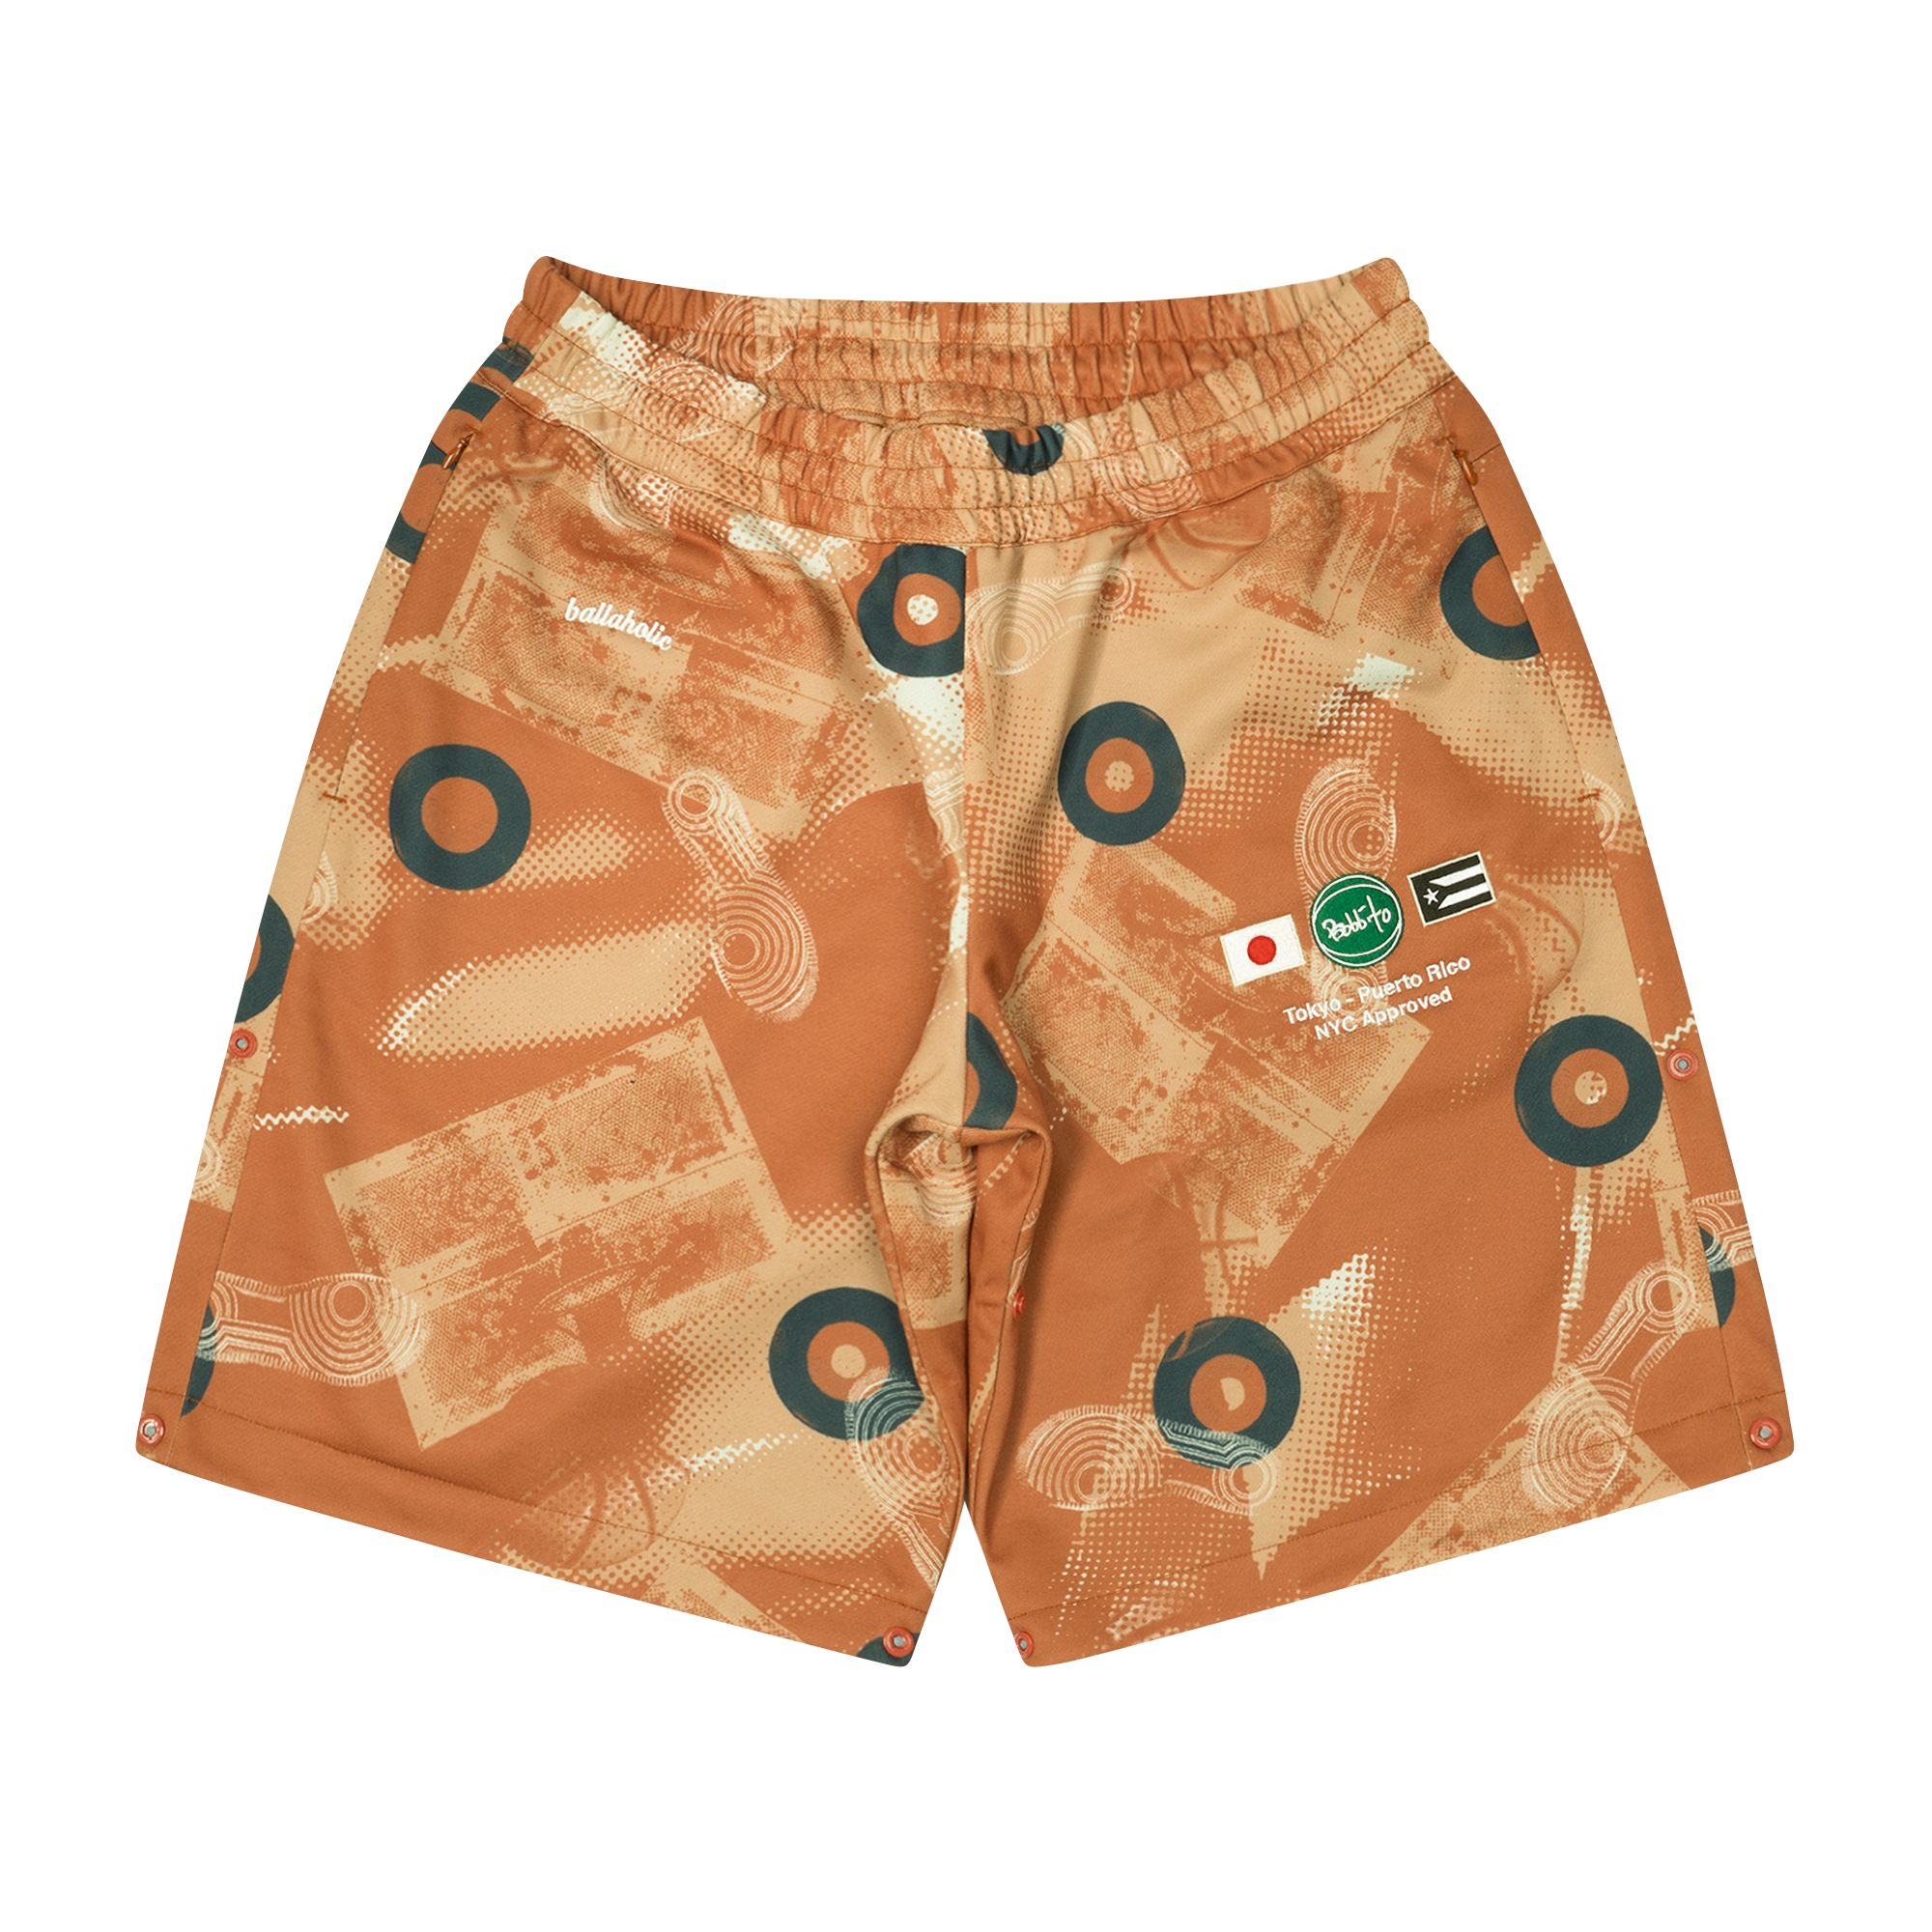 ballaholic camo shorts(olive) XL